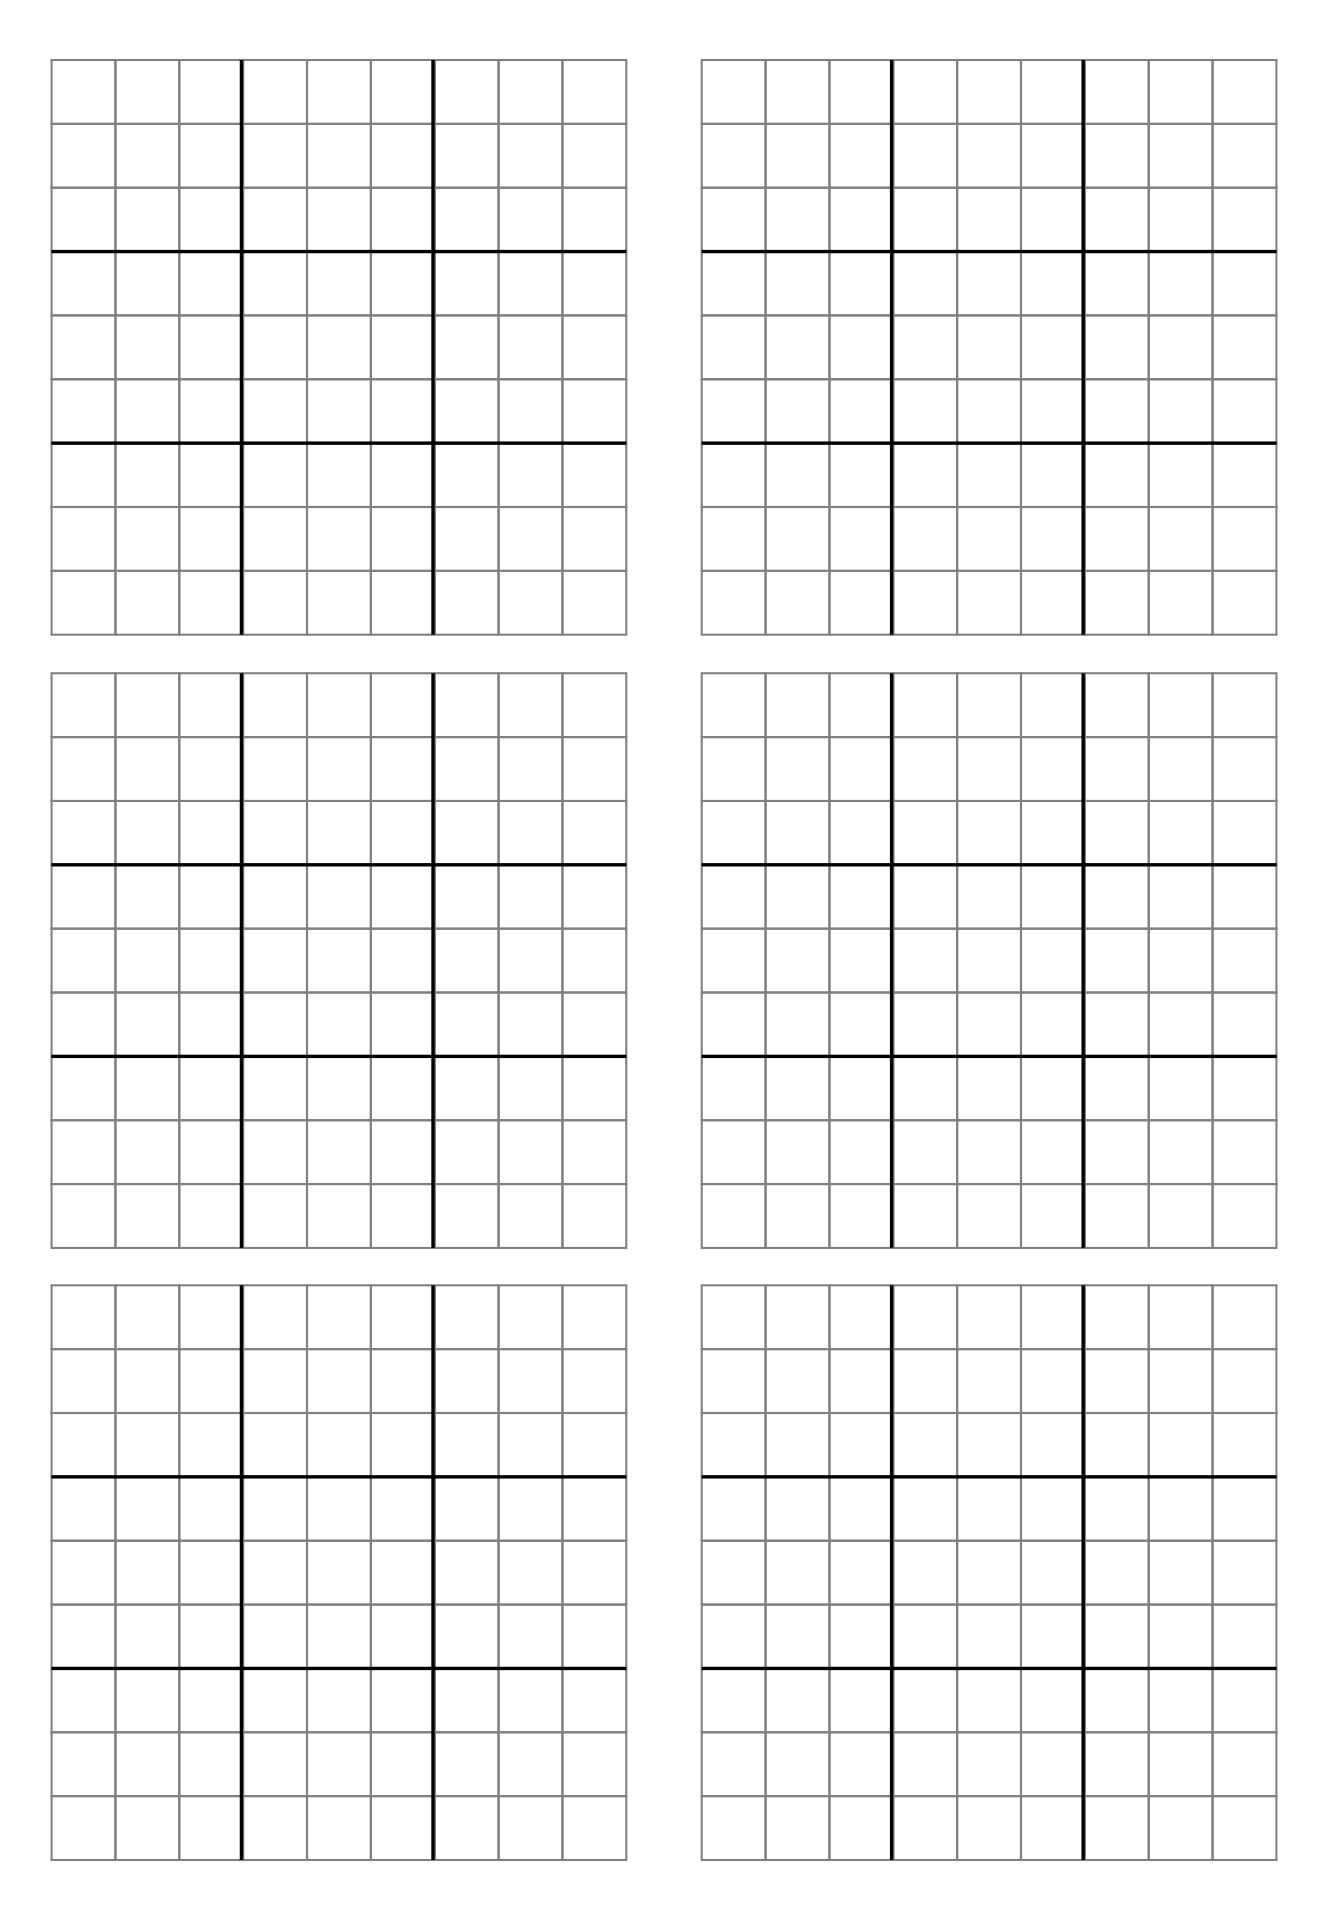 4 Best Images of Printable Blank Sudoku Grid 2 Per Page Printable